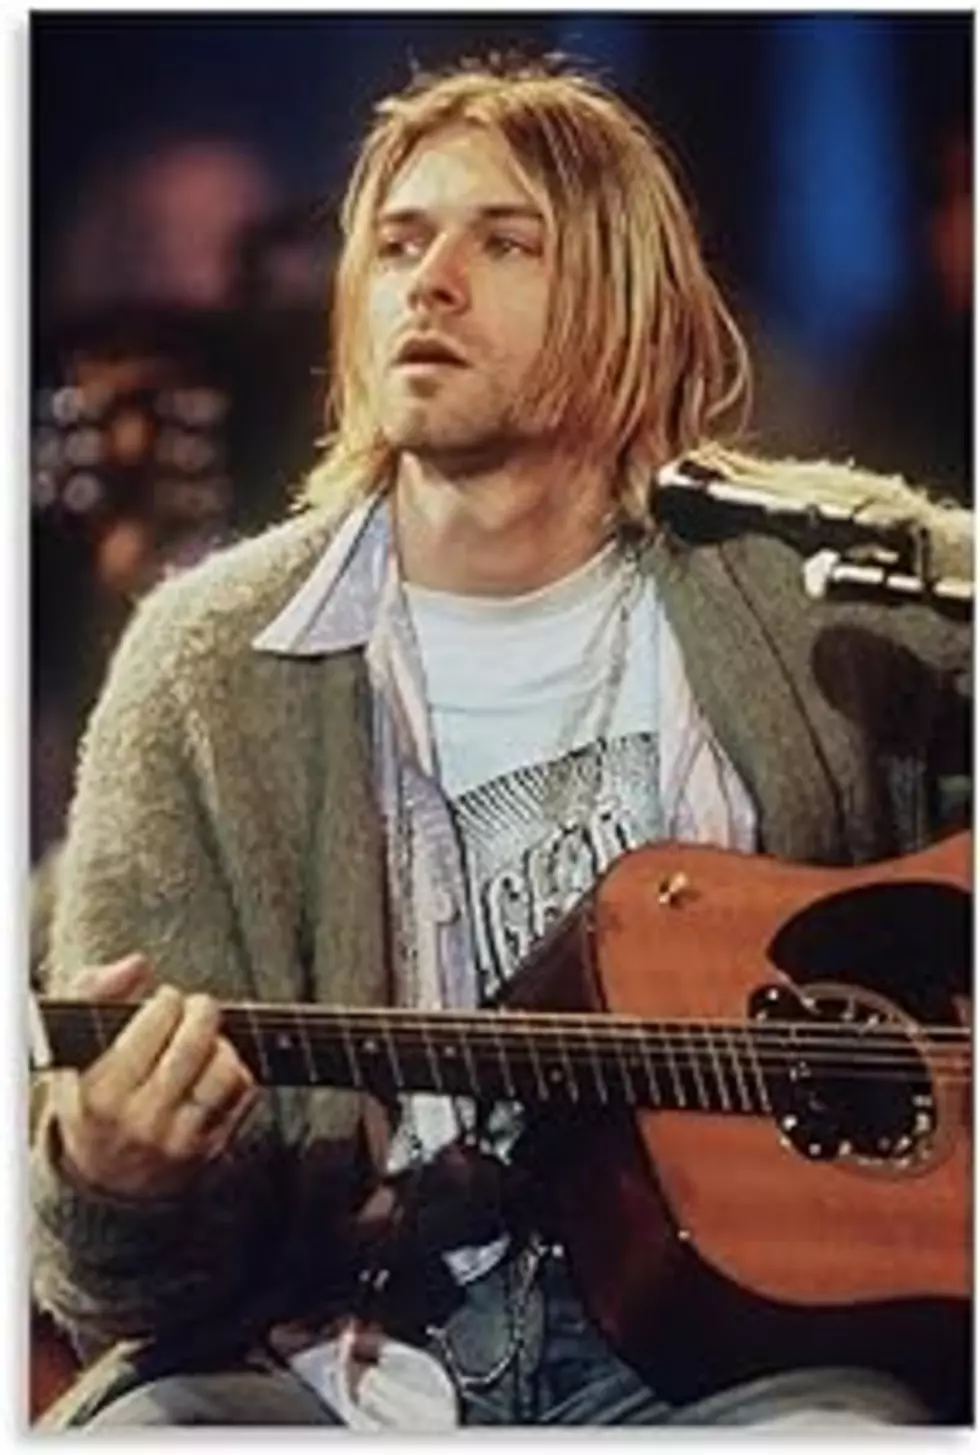 Kurt Cobain: A Tribute To Nirvana's Iconic Frontman